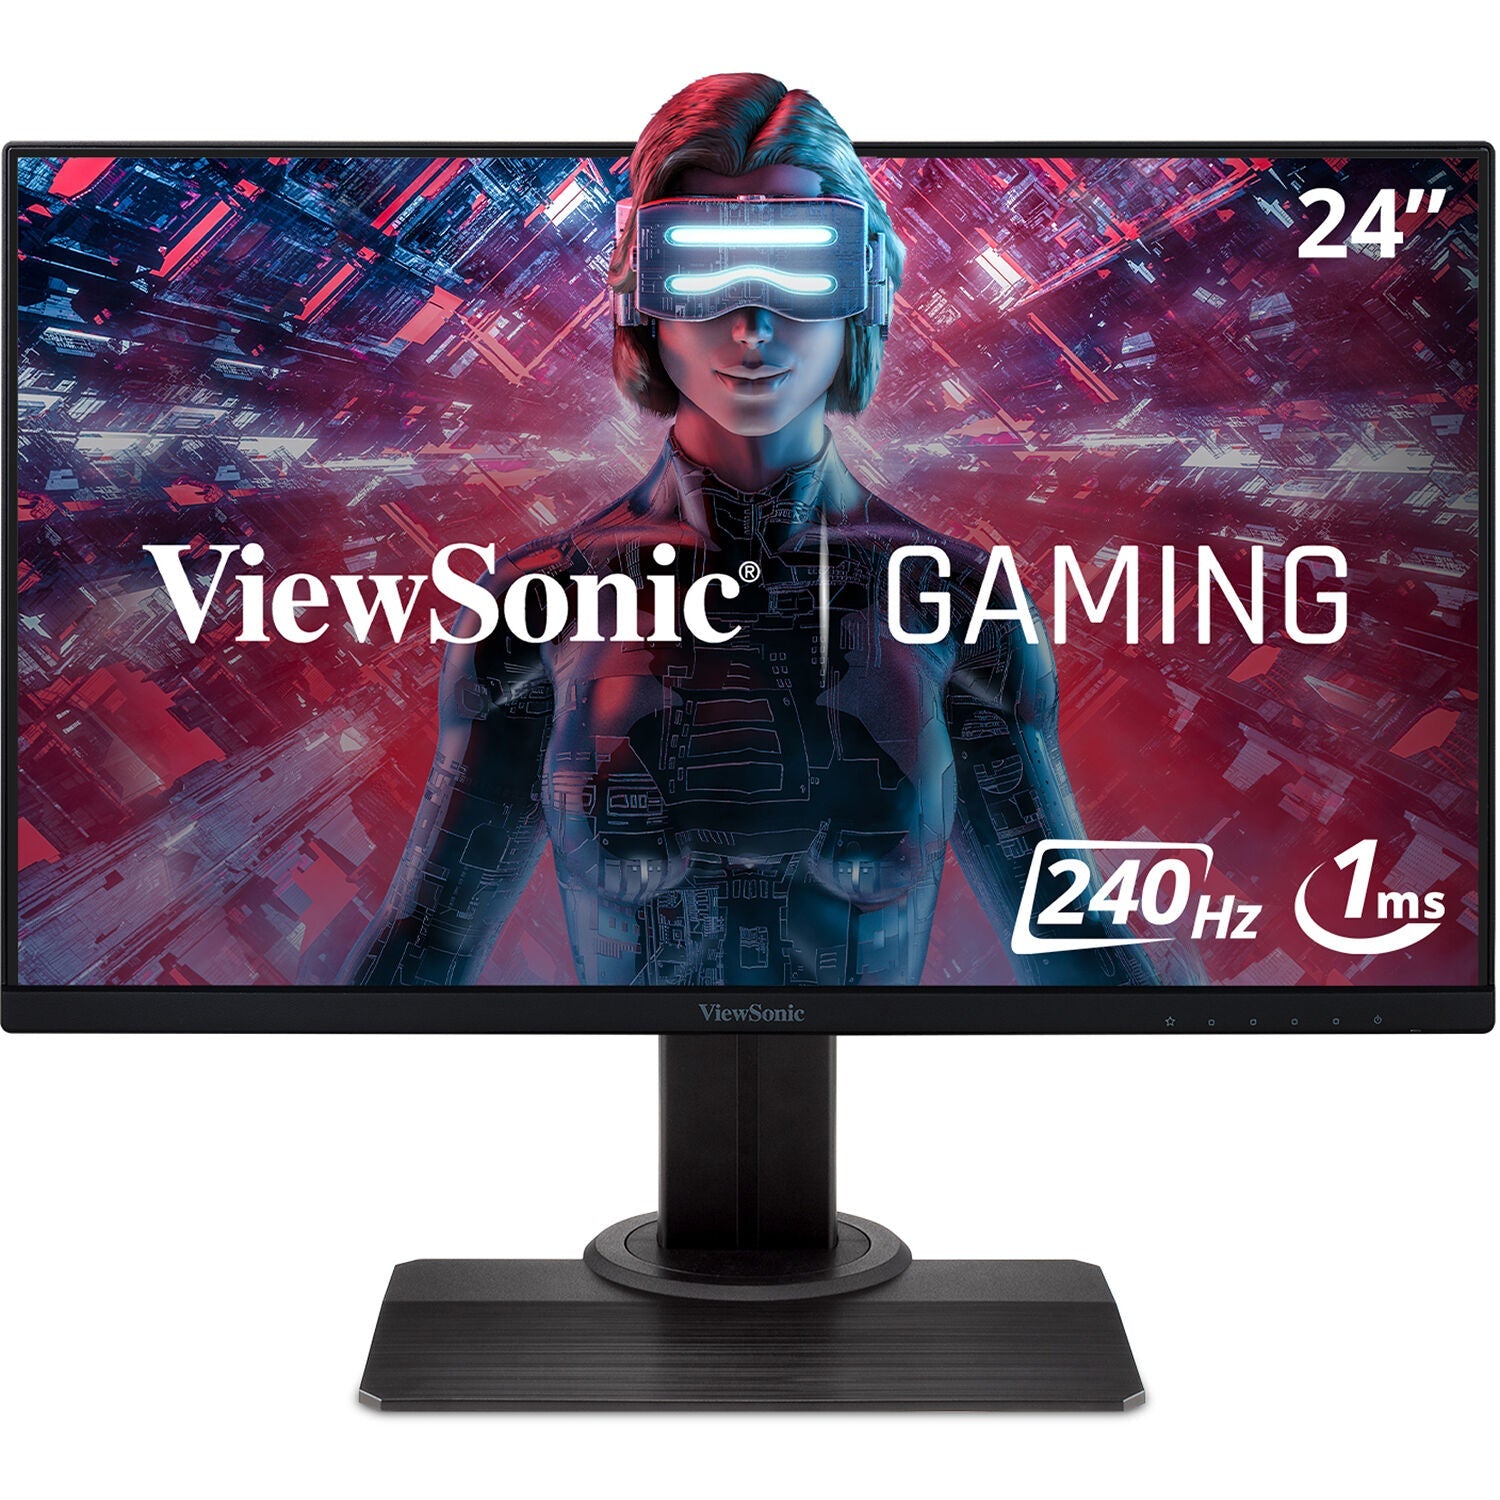 ViewSonic XG2431-S 24” 240Hz IPS Gaming Monitor - Certified Refurbished